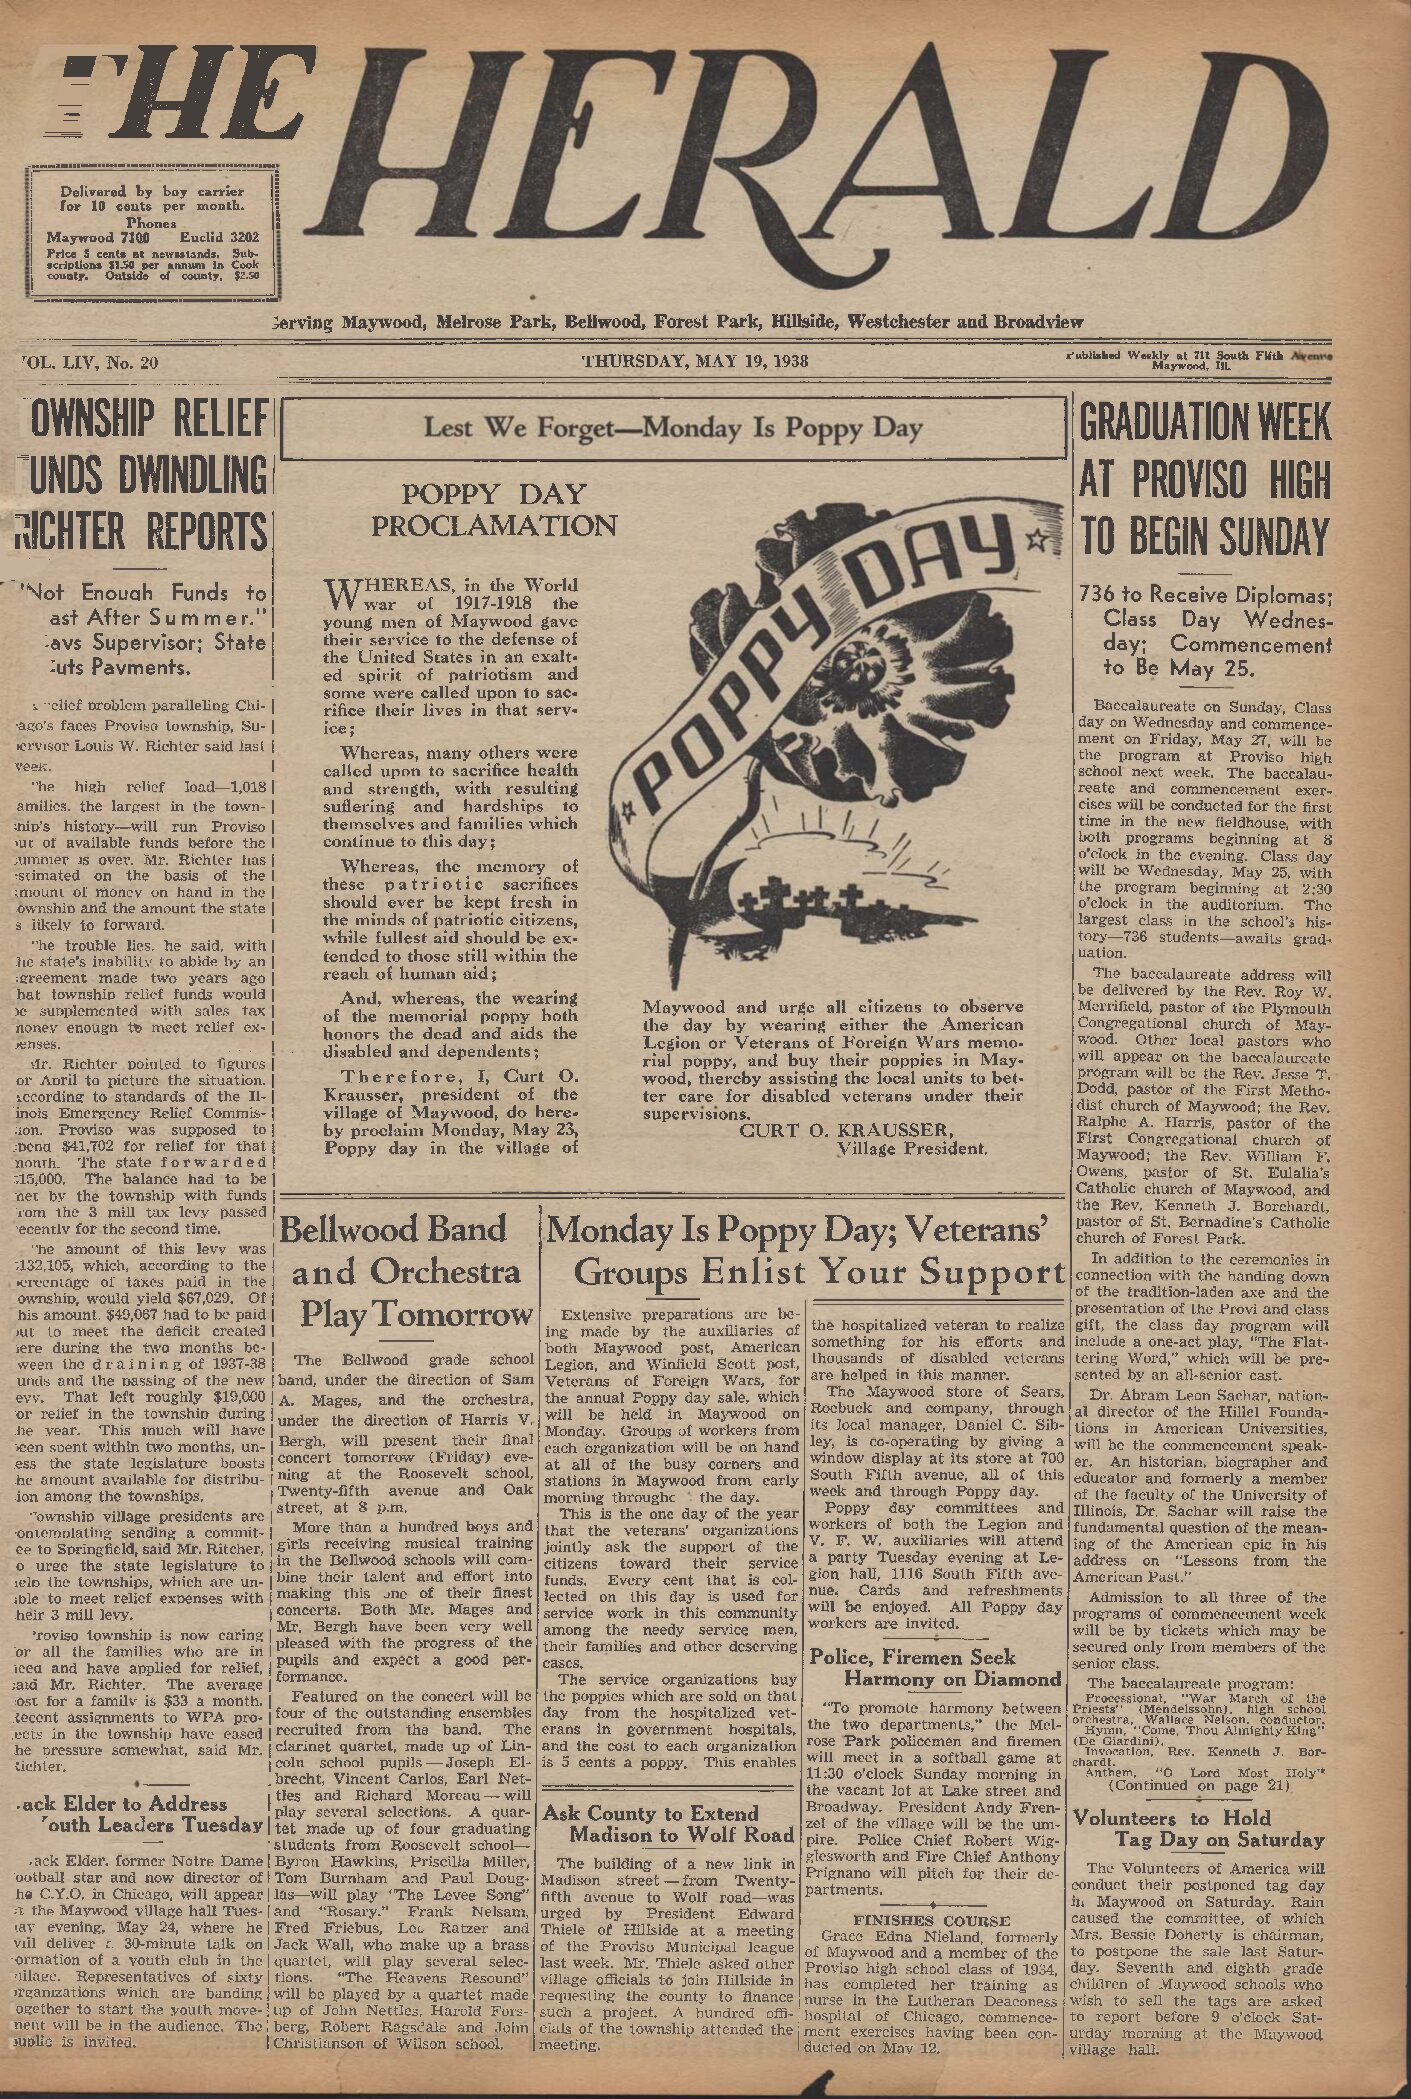 The Herald – 19380519